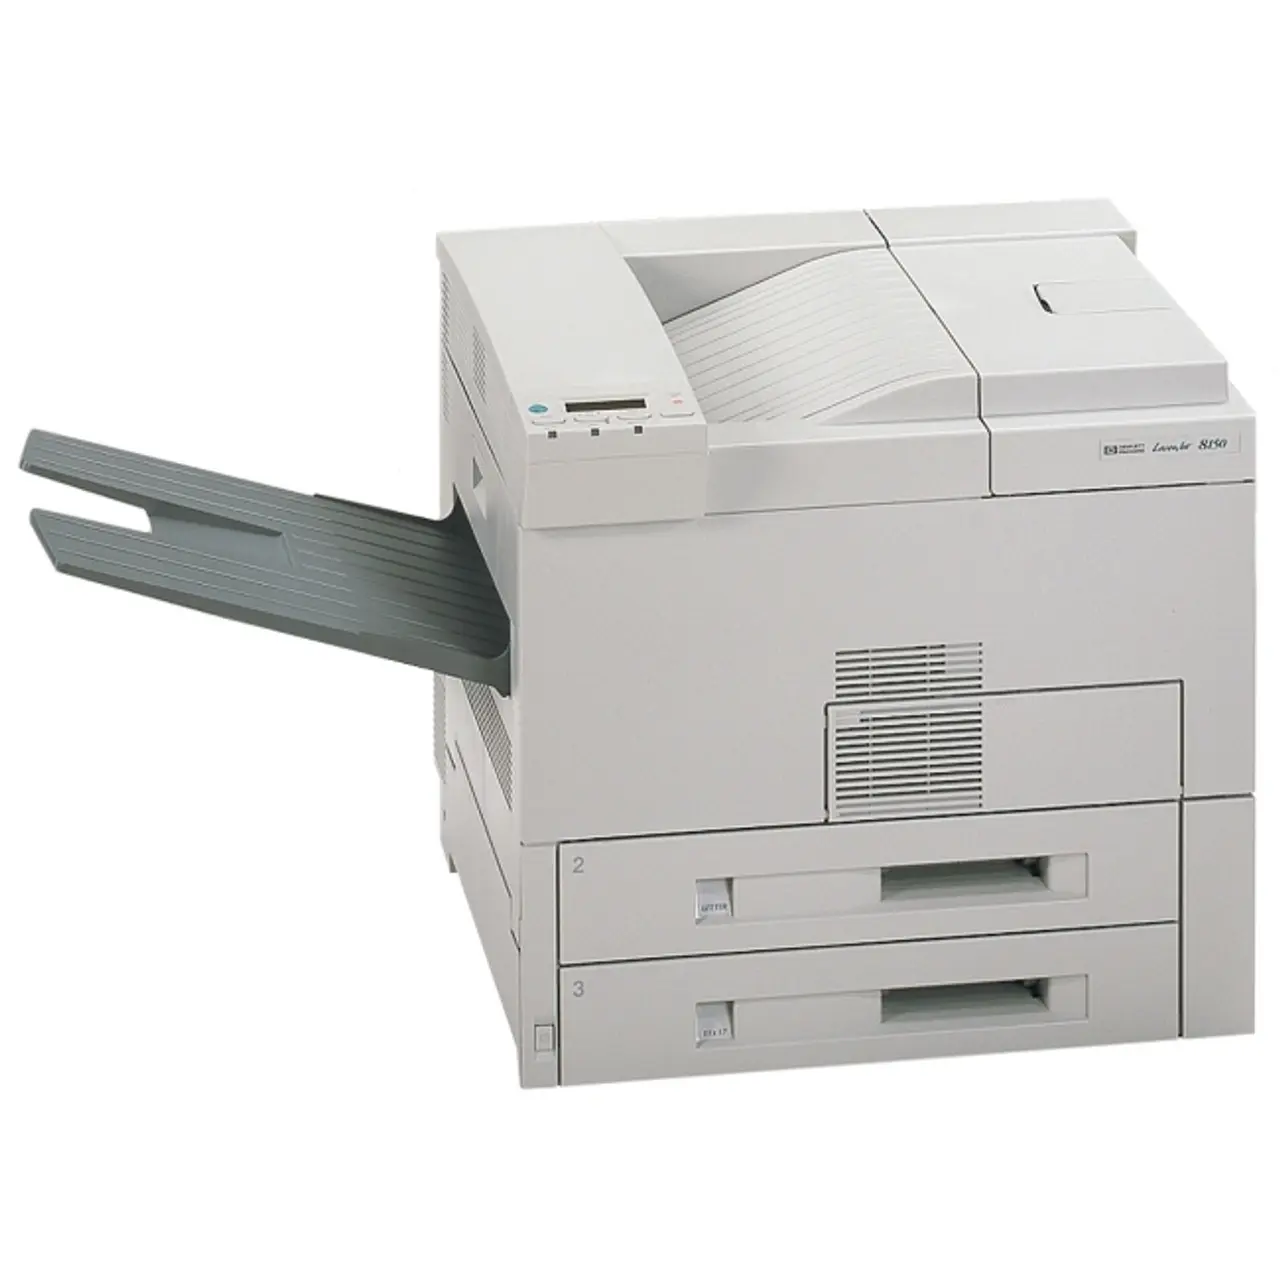 hewlett packard 11x17 laser printer - Can HP printer print 11x17